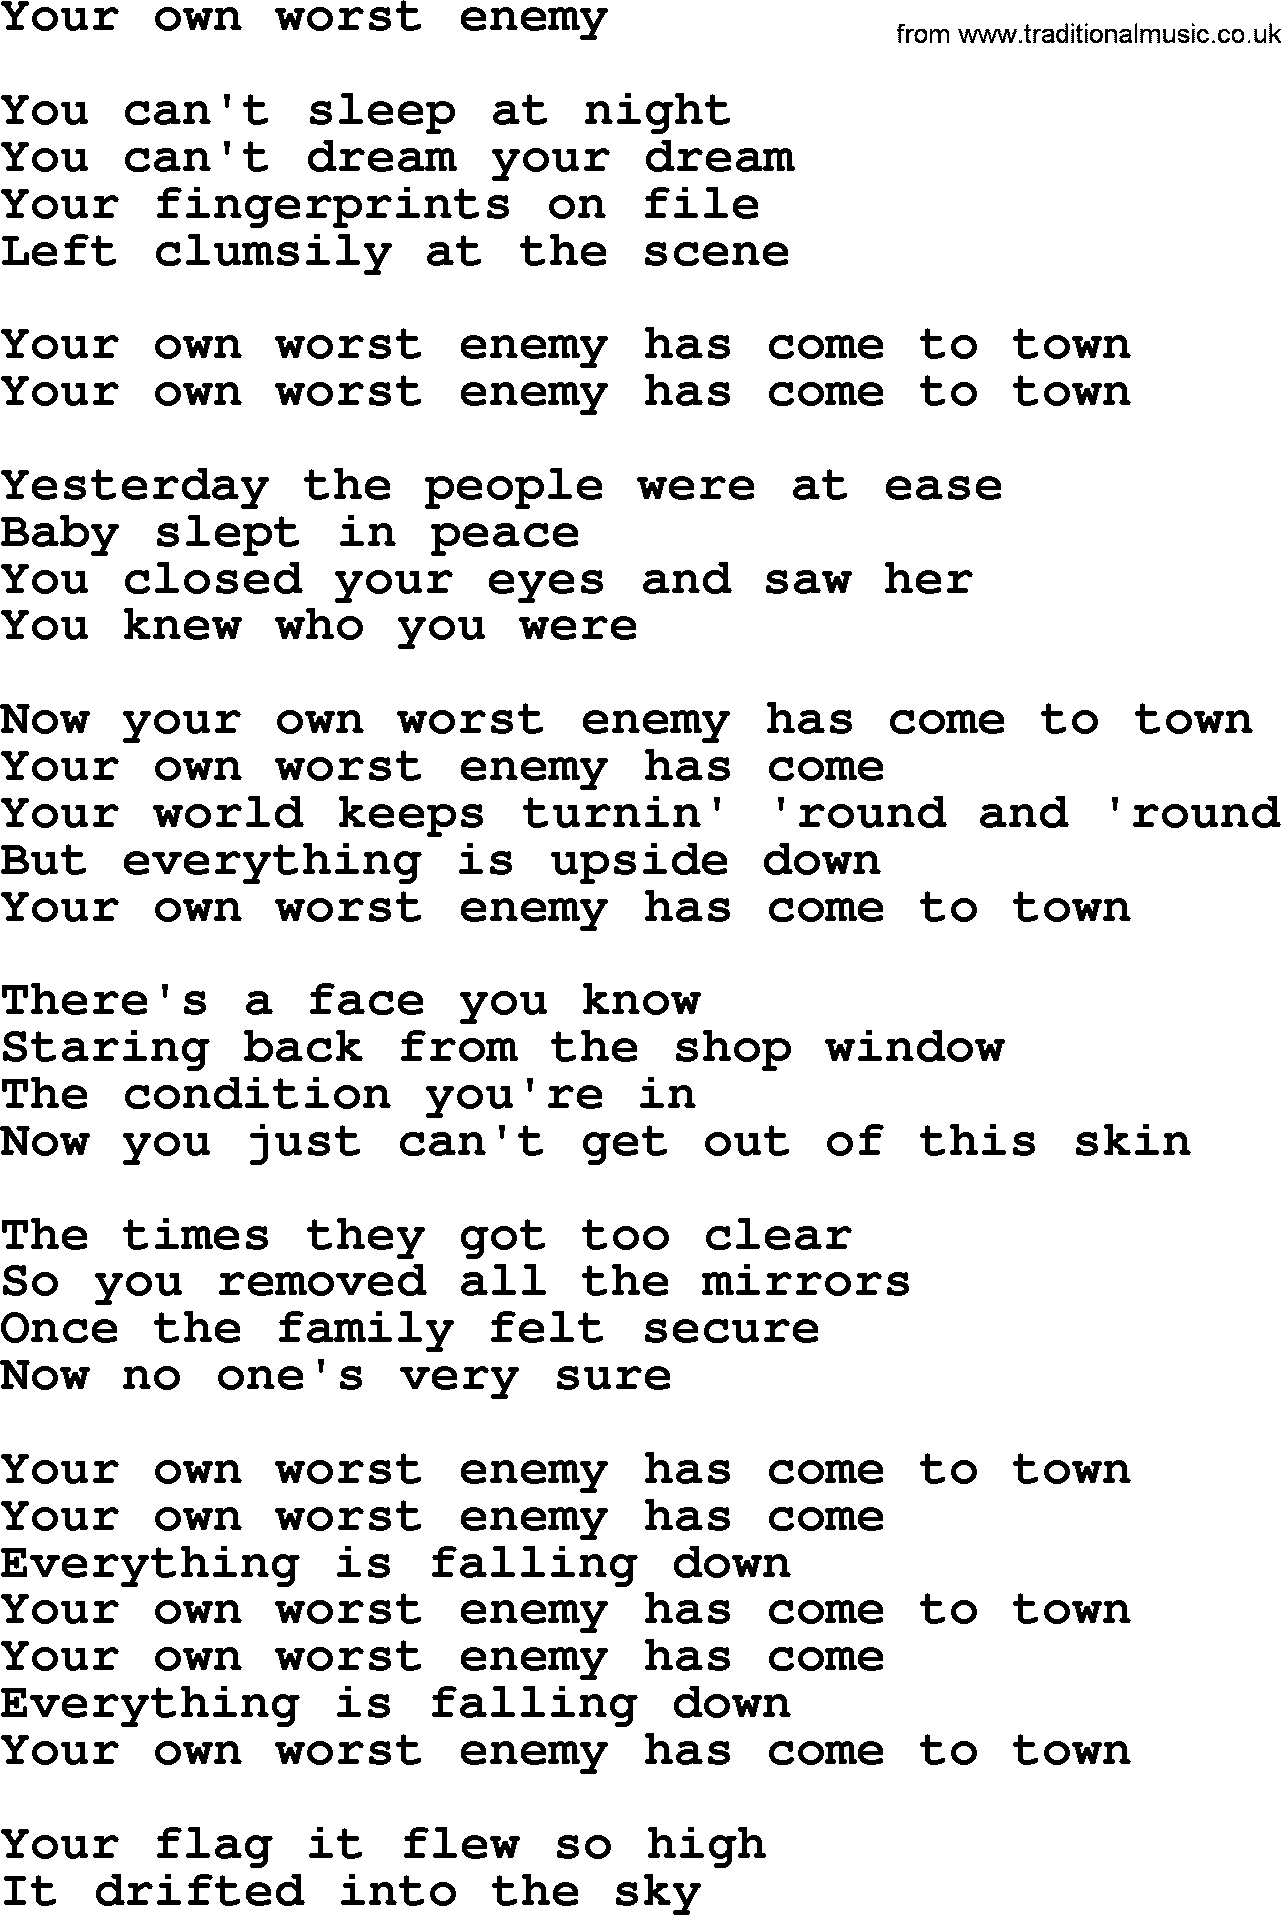 Bruce Springsteen song: Your Own Worst Enemy lyrics